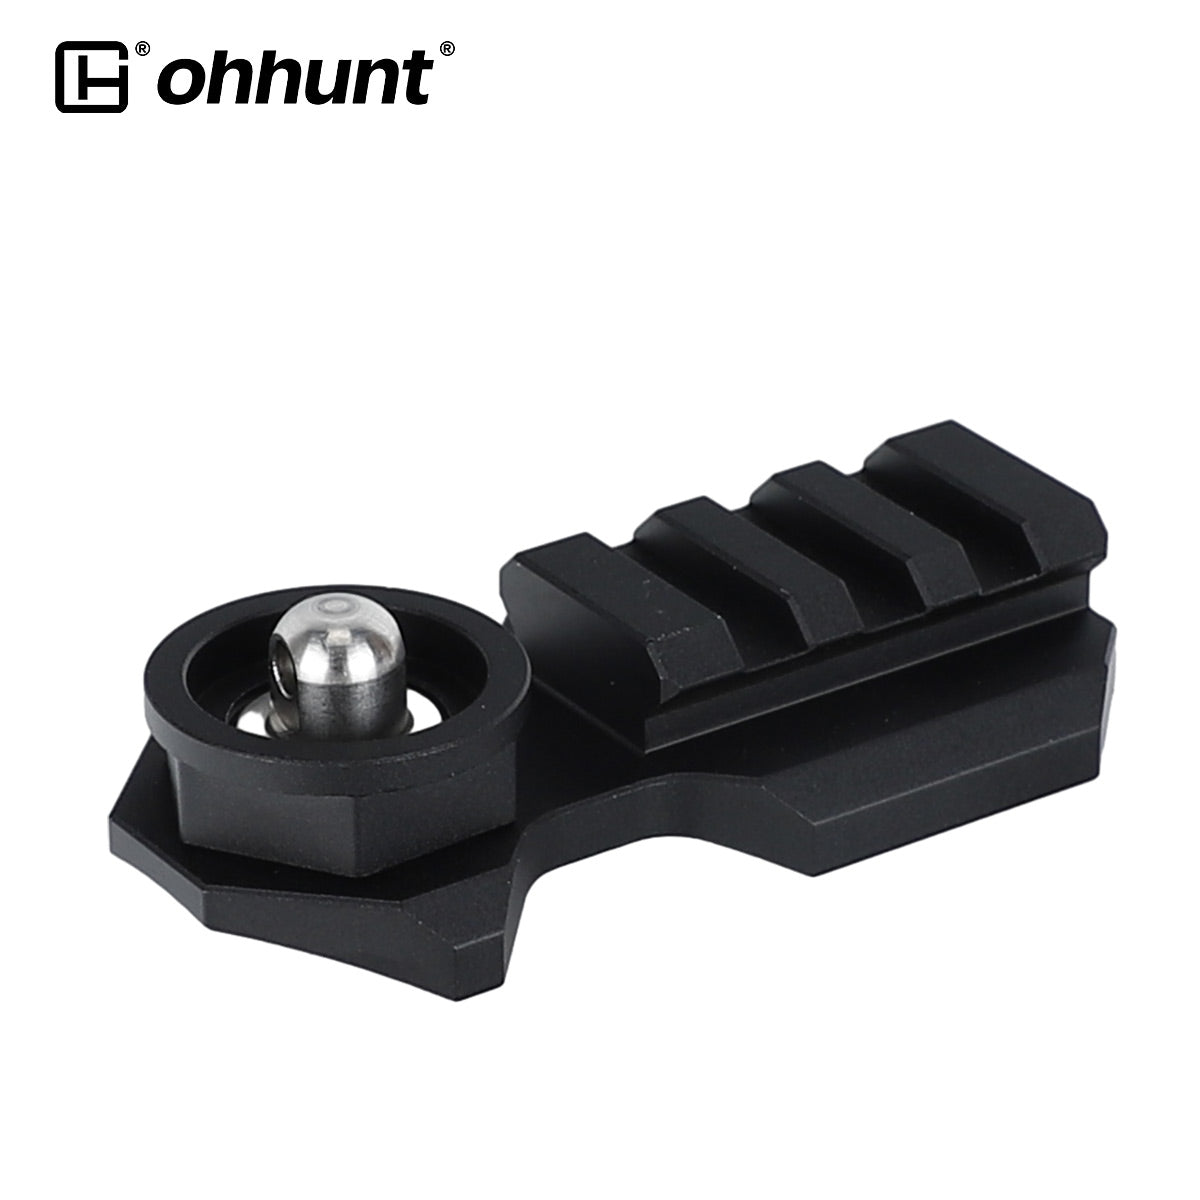 ohhunt® Sling Stud Picatinny Rail Adapter